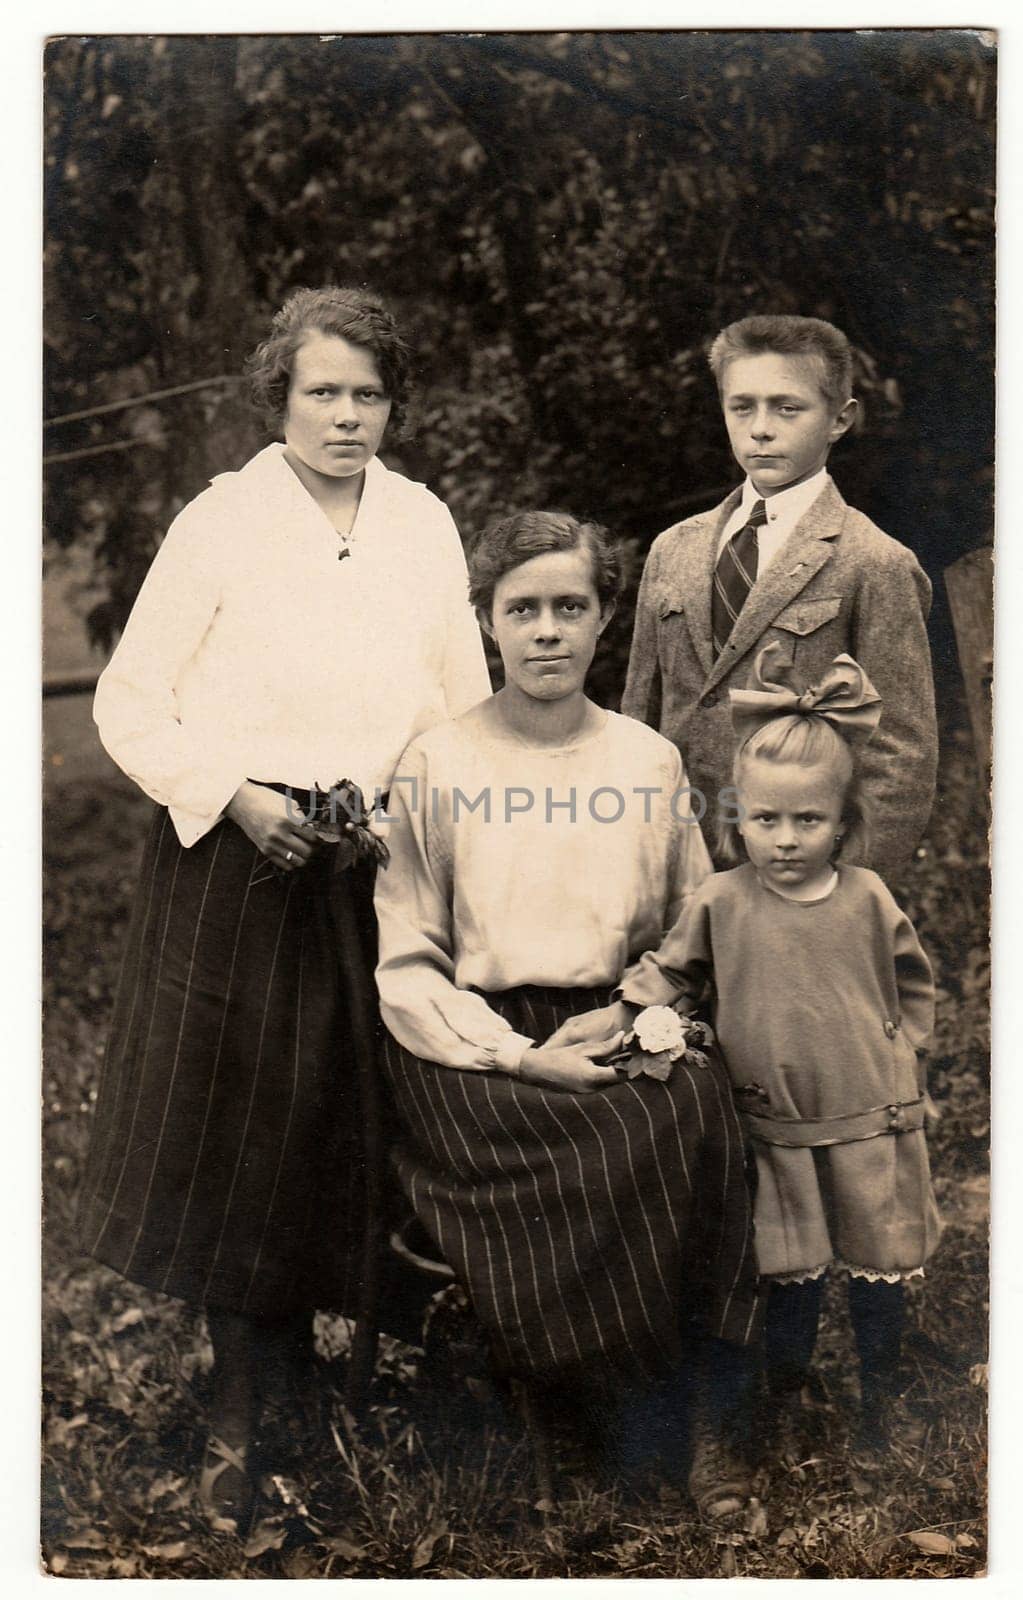 THE CZECHOSLOVAK REPUBLIC - CIRCA 1930s: Vintage photo shows women with children outdoors. Antique black & white photo.